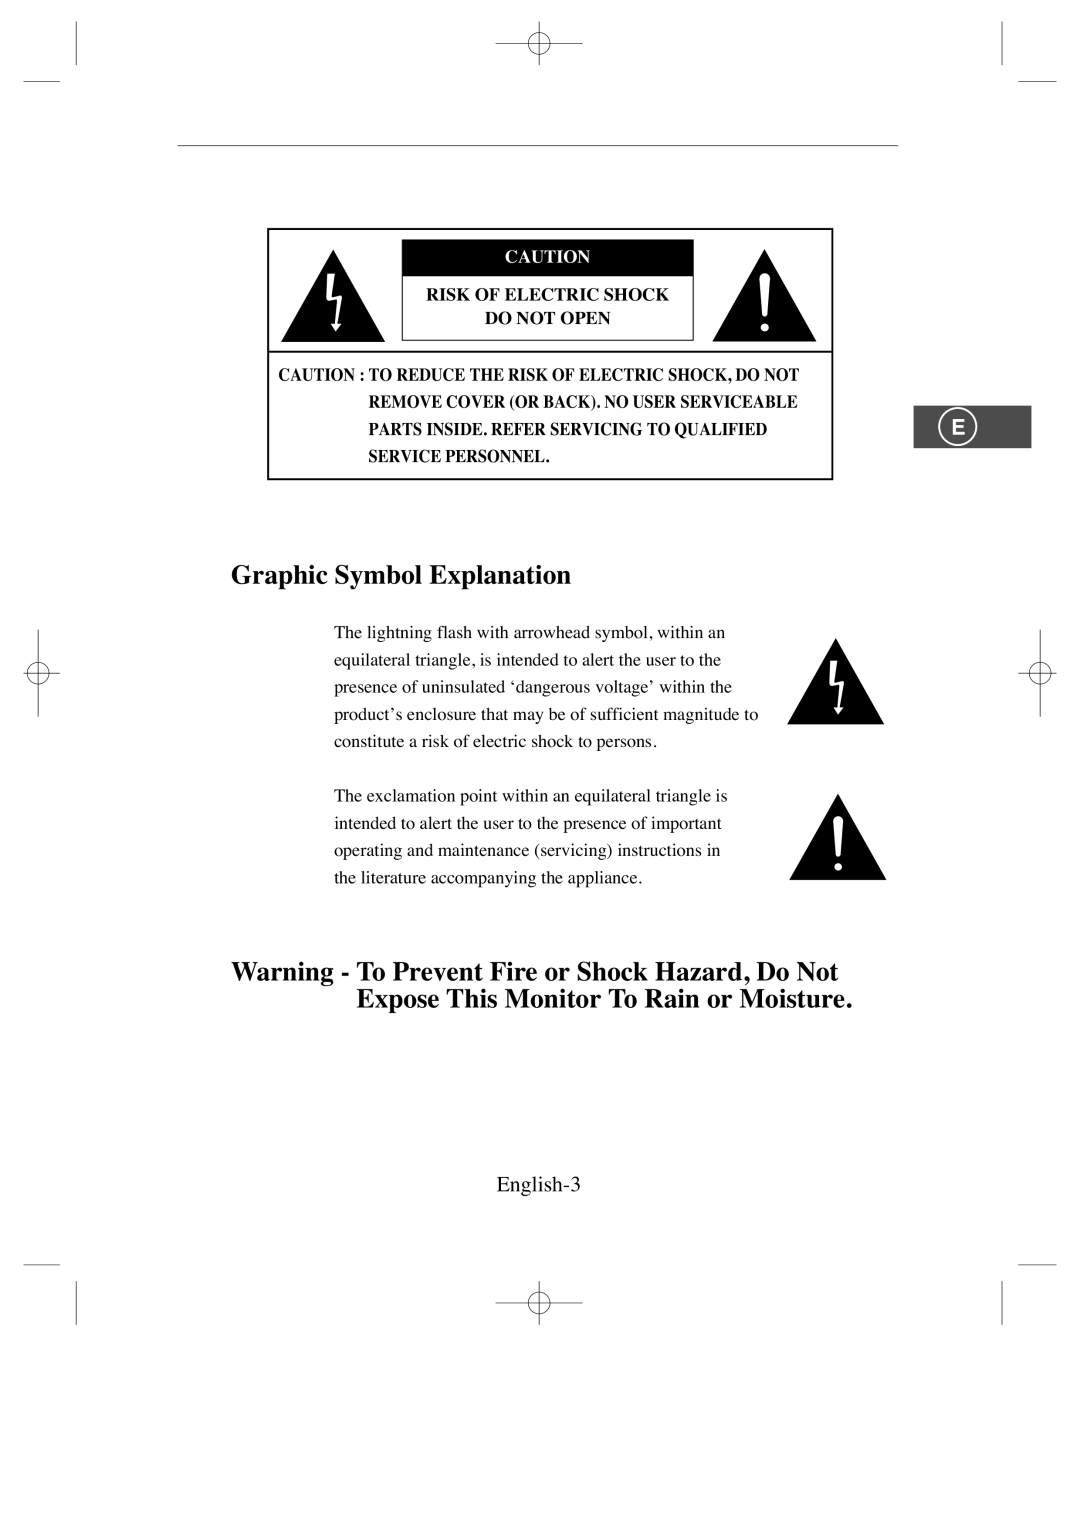 Samsung SMC-213, SMC-214 U manual English-3, Graphic Symbol Explanation, Risk Of Electric Shock Do Not Open 